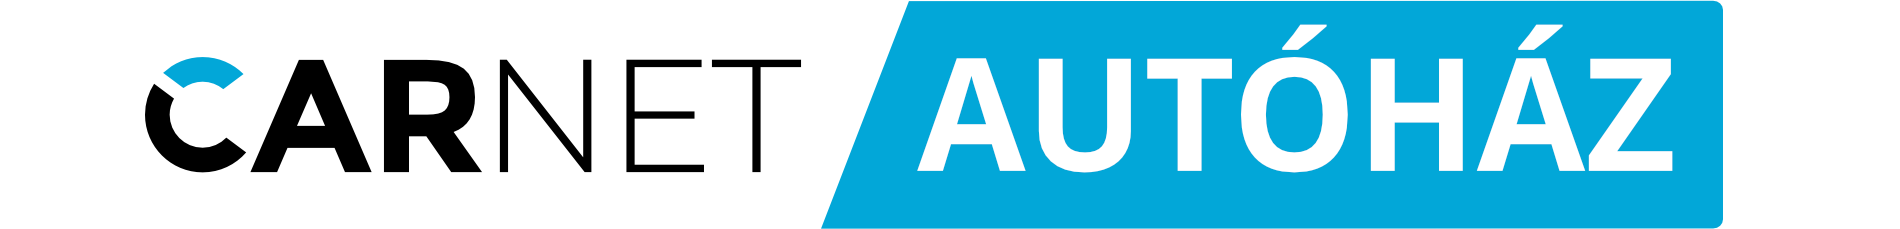 carnet-autohaz-logo